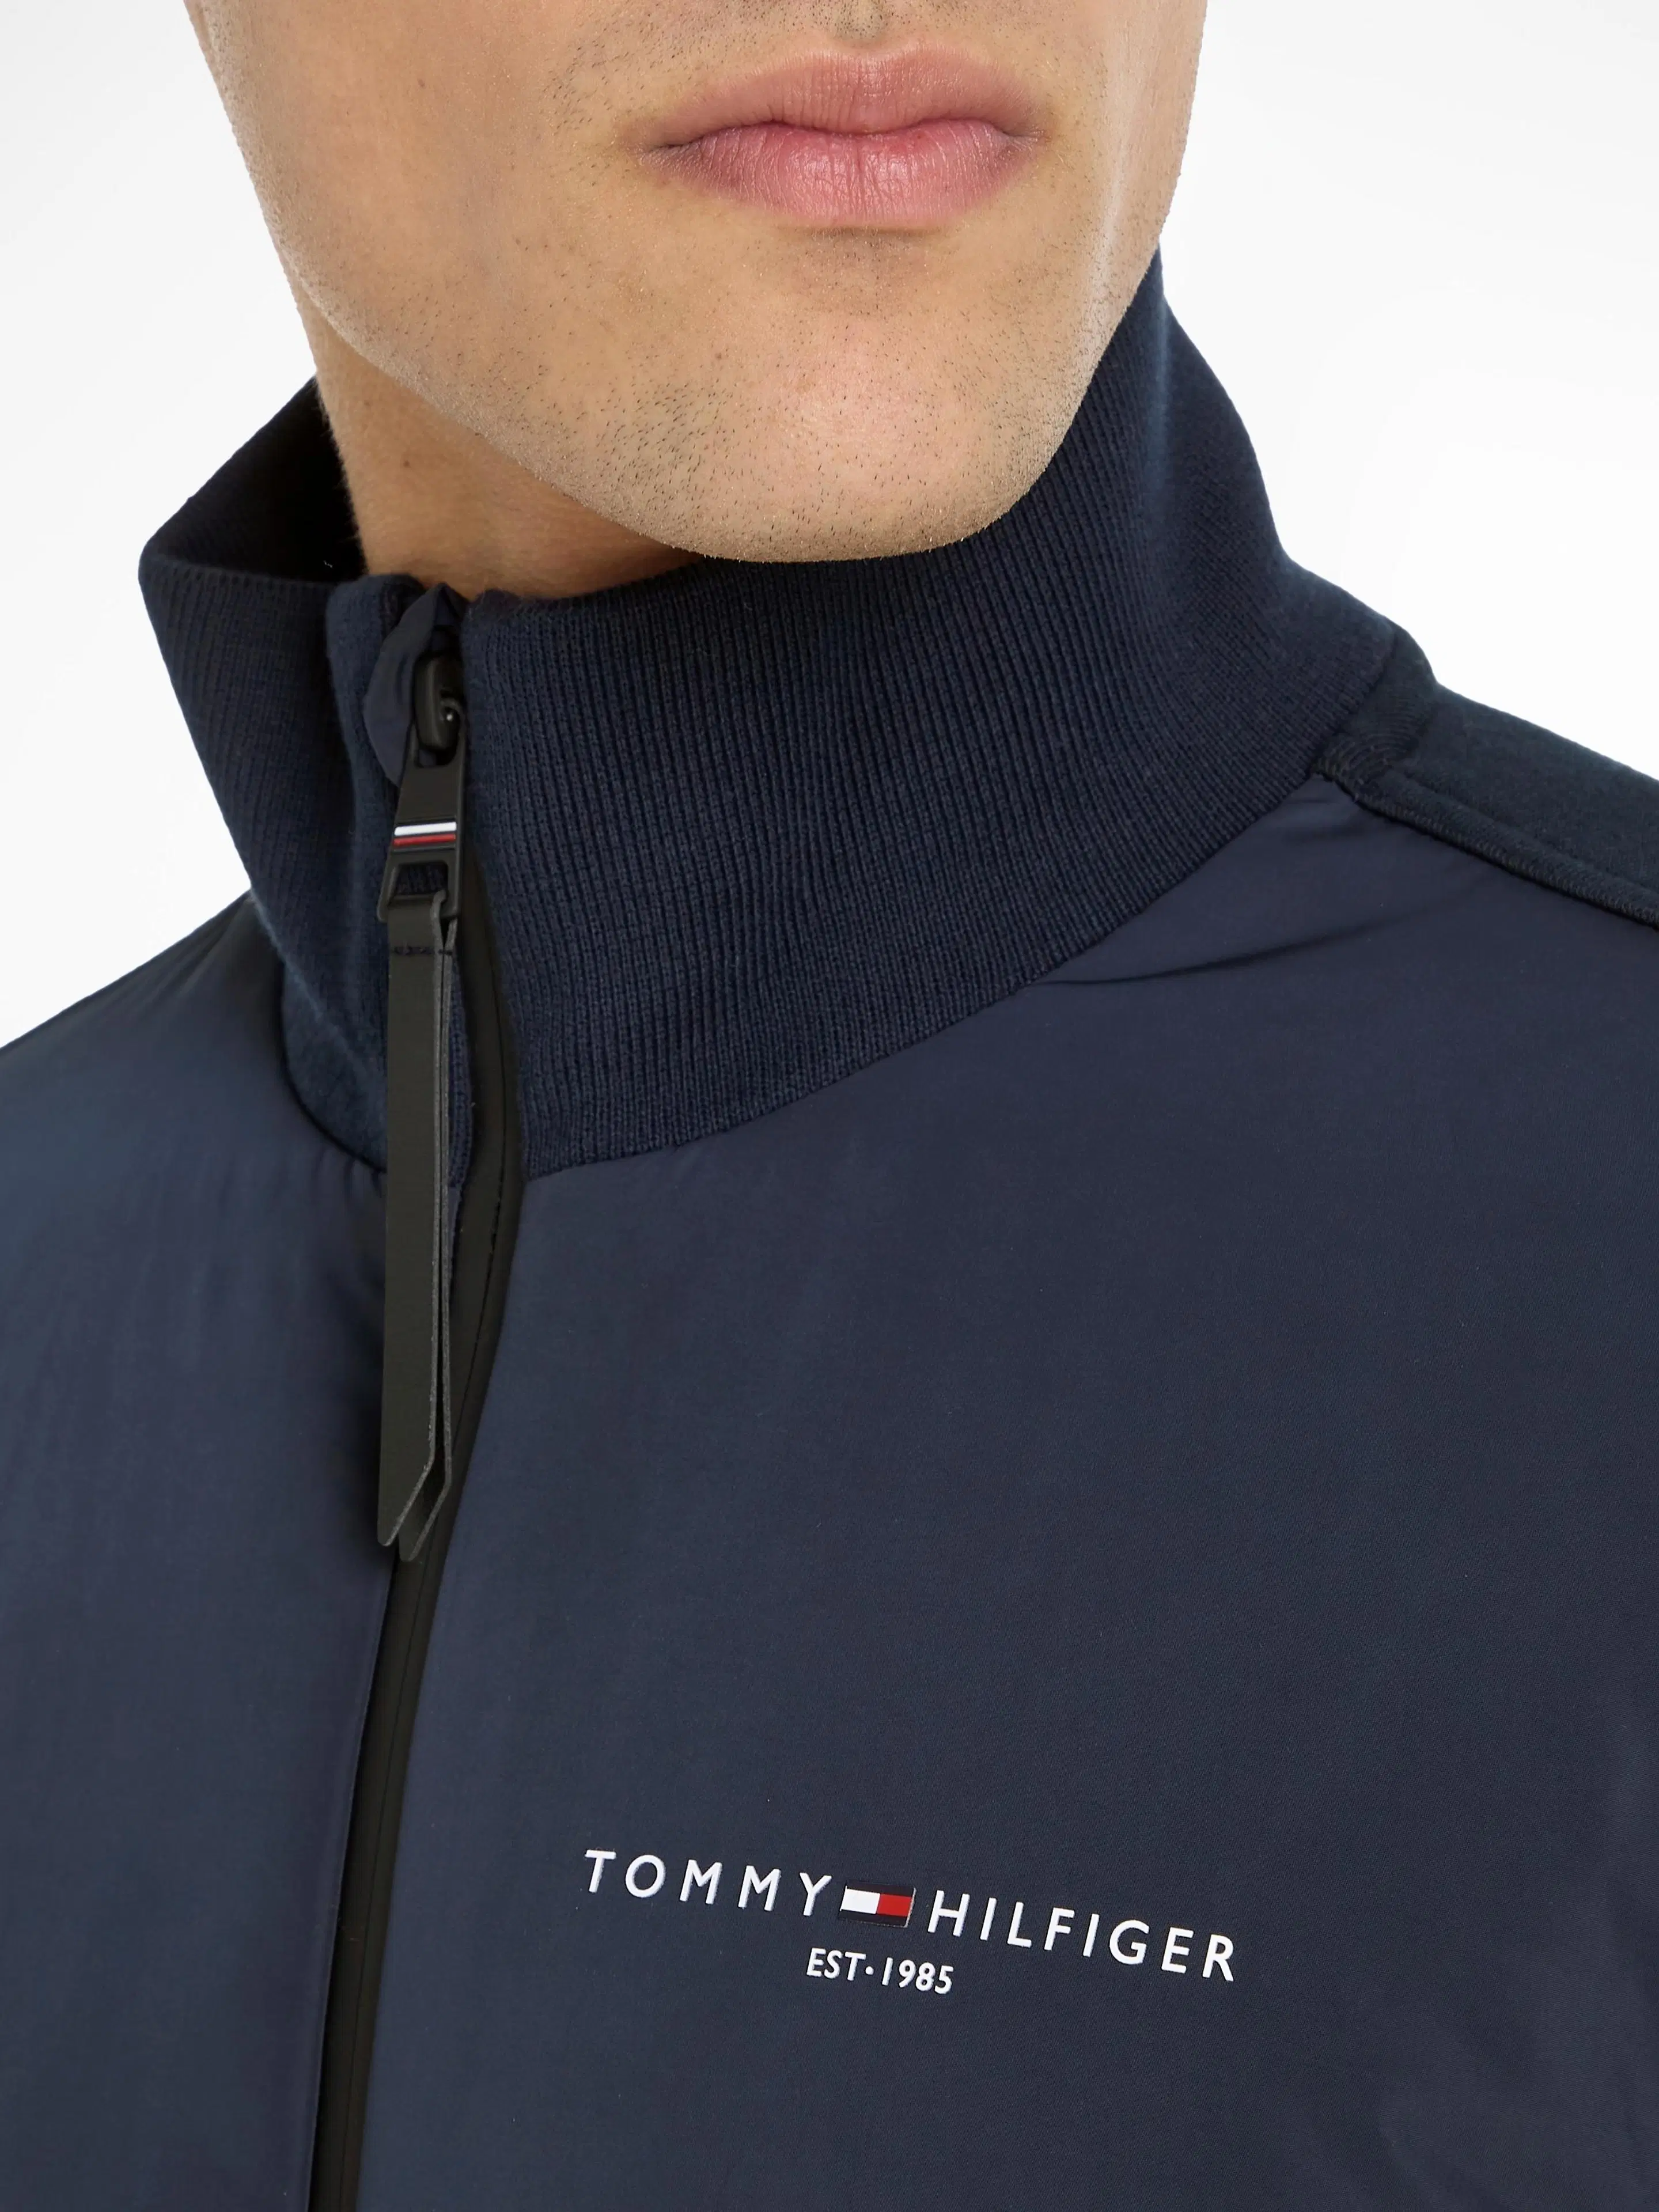 Tommy Hilfiger Tommy logo mix mediastand zip neuletakki